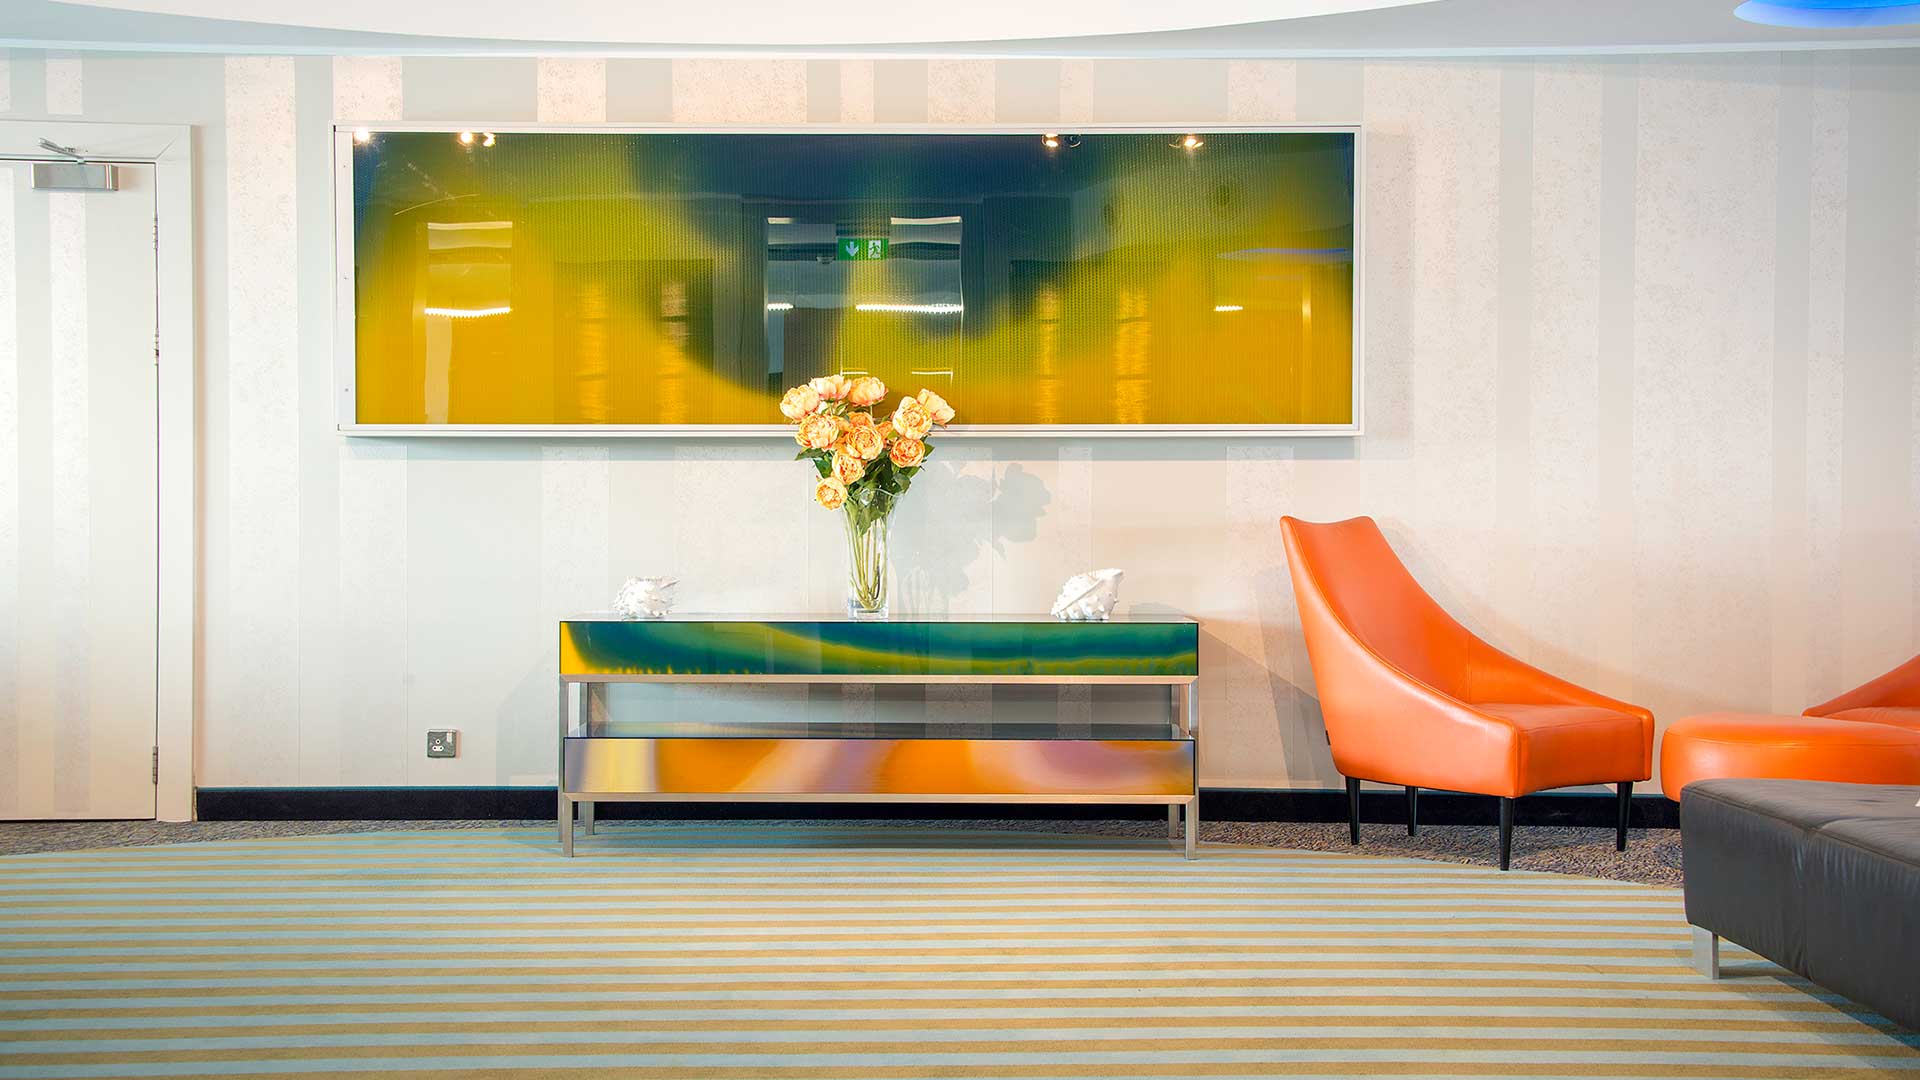 Cork International Hotel lobby artwork and trendy decor